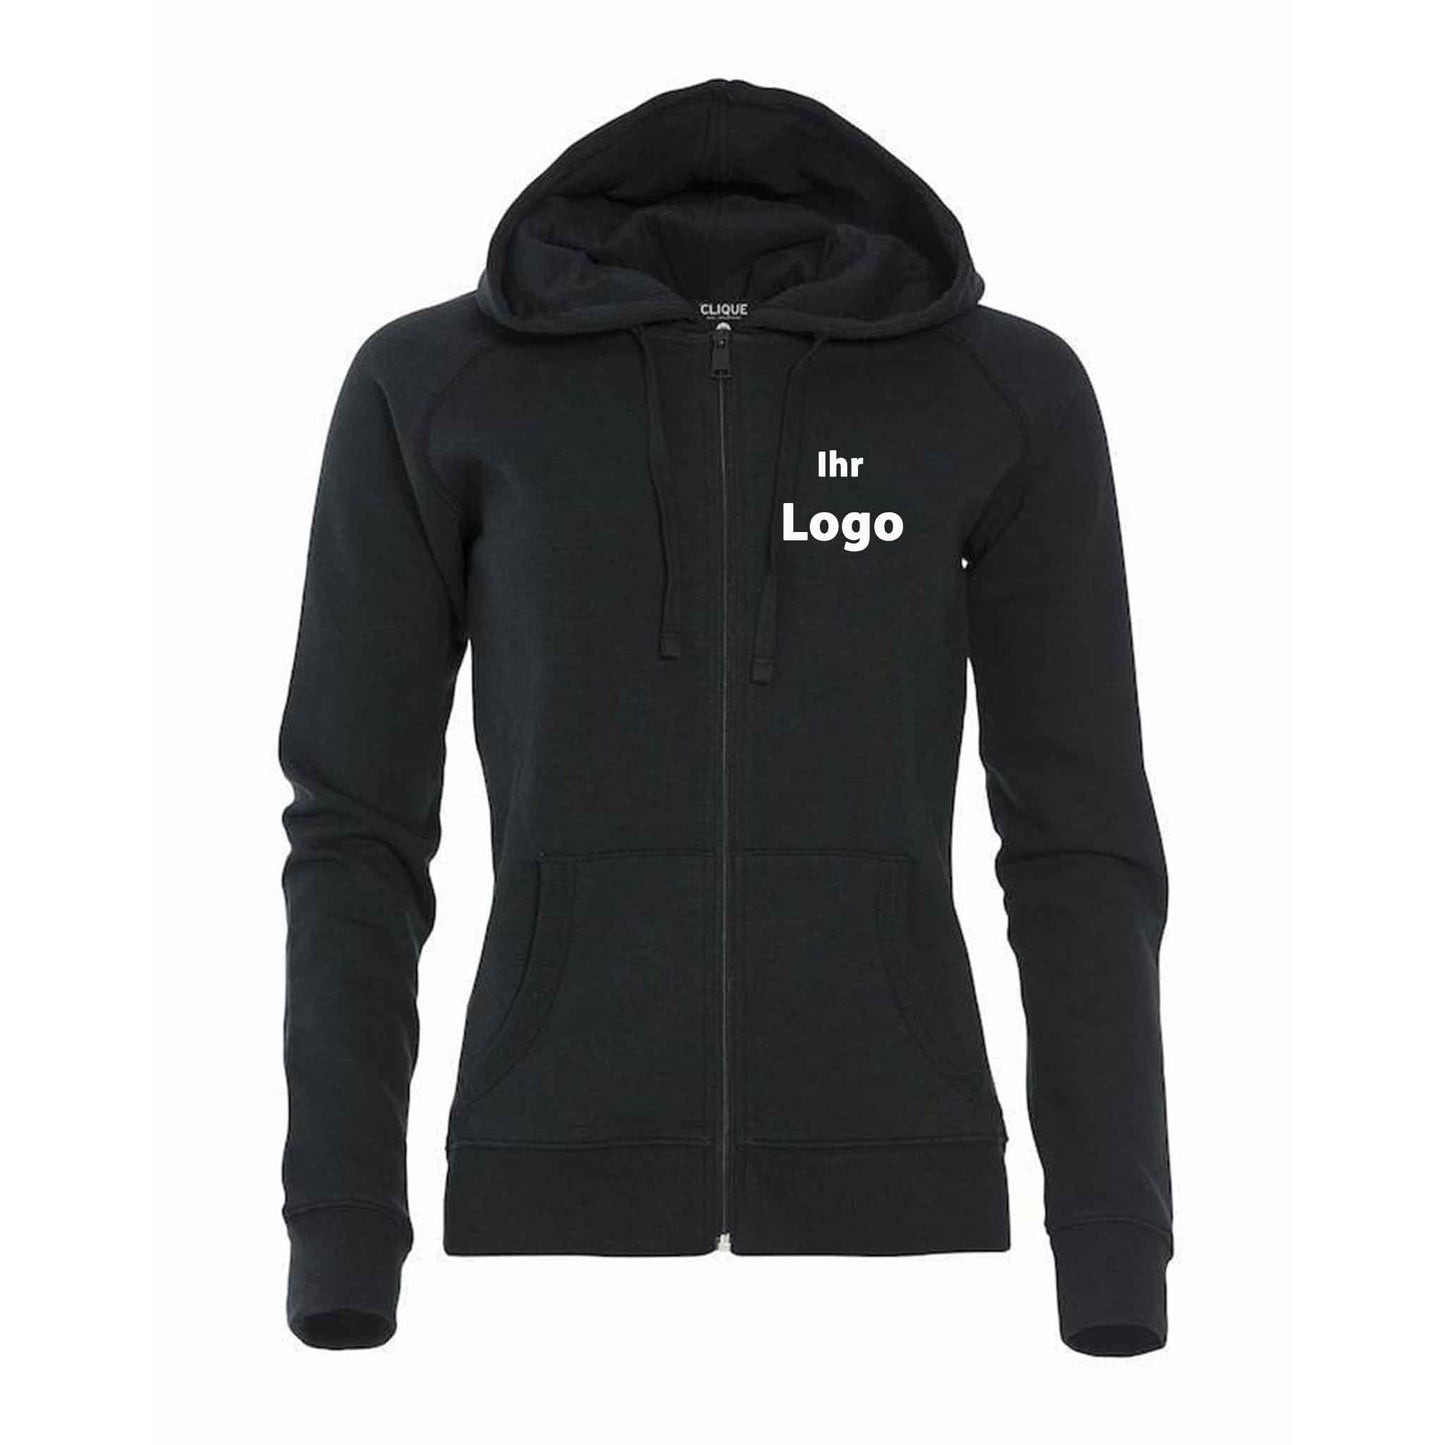 Clique Damen Sweatjacke Mit Kapuze 'Loris Ladies' schwarze hoodie mit Firmenlogo